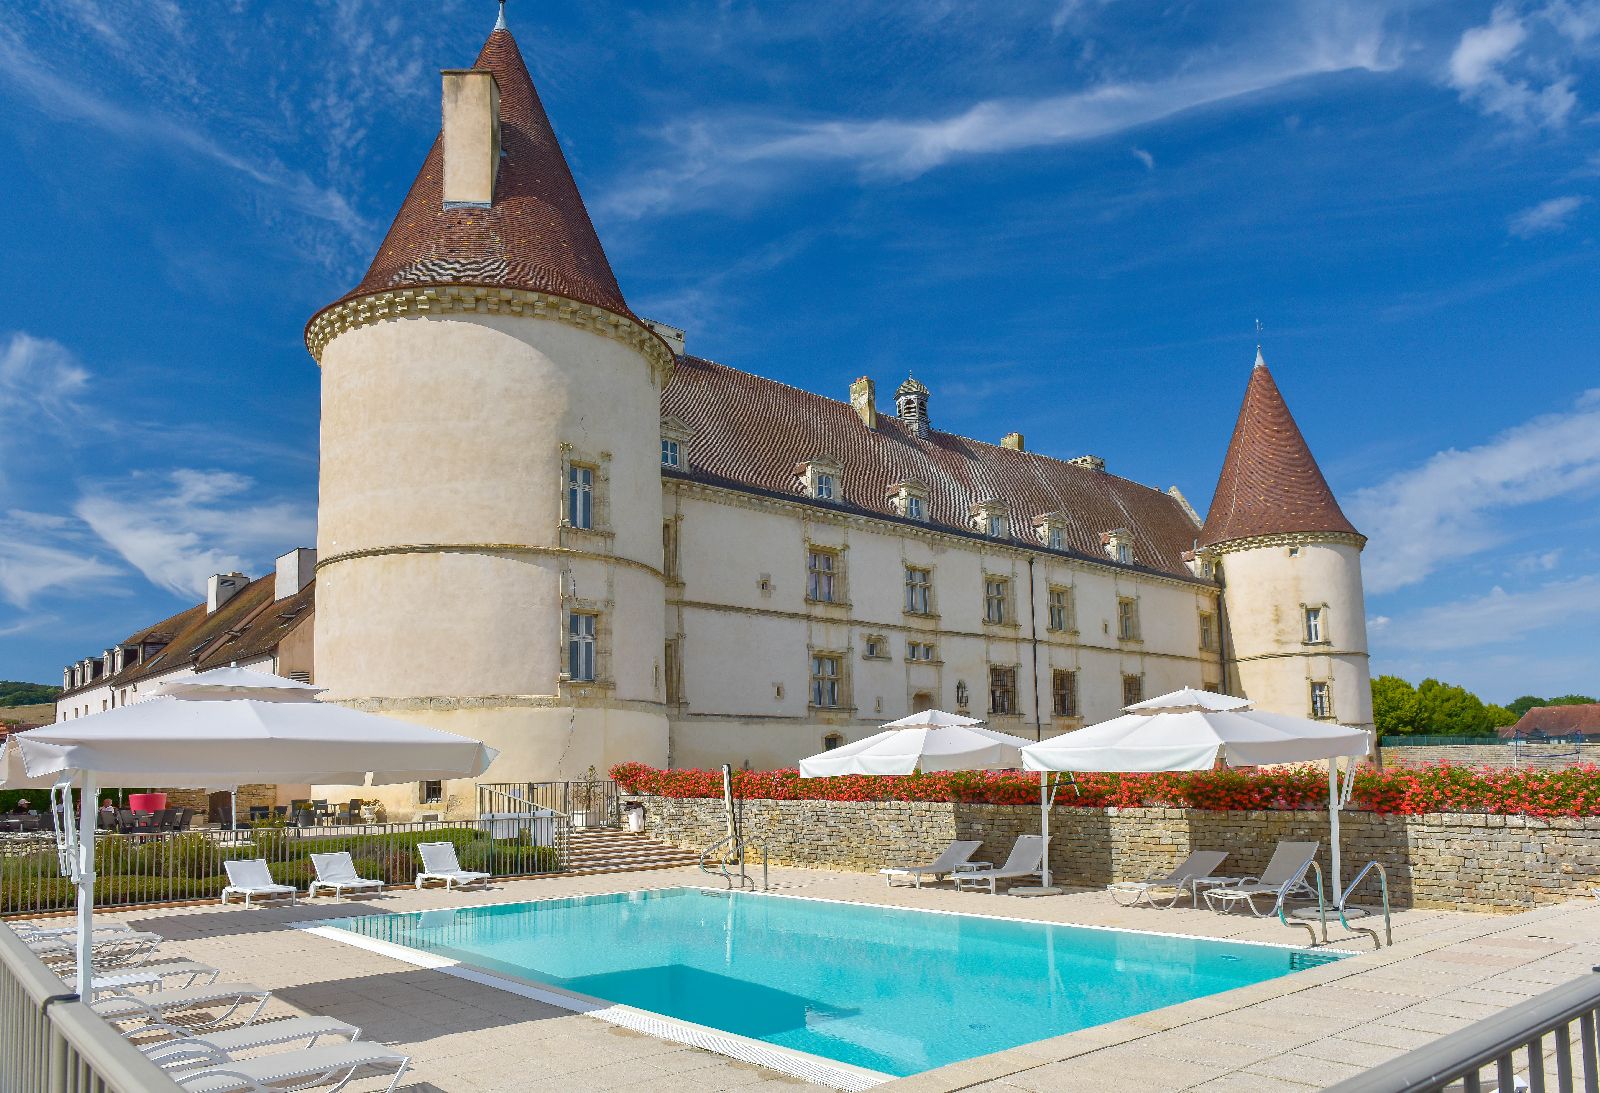 golf-expedition-golf-reis-Frankrijk-Bourgogne-Chateau-de-Chailly-buitenaanzicht-zwembad-kasteel-hotel-gebouw.jpg